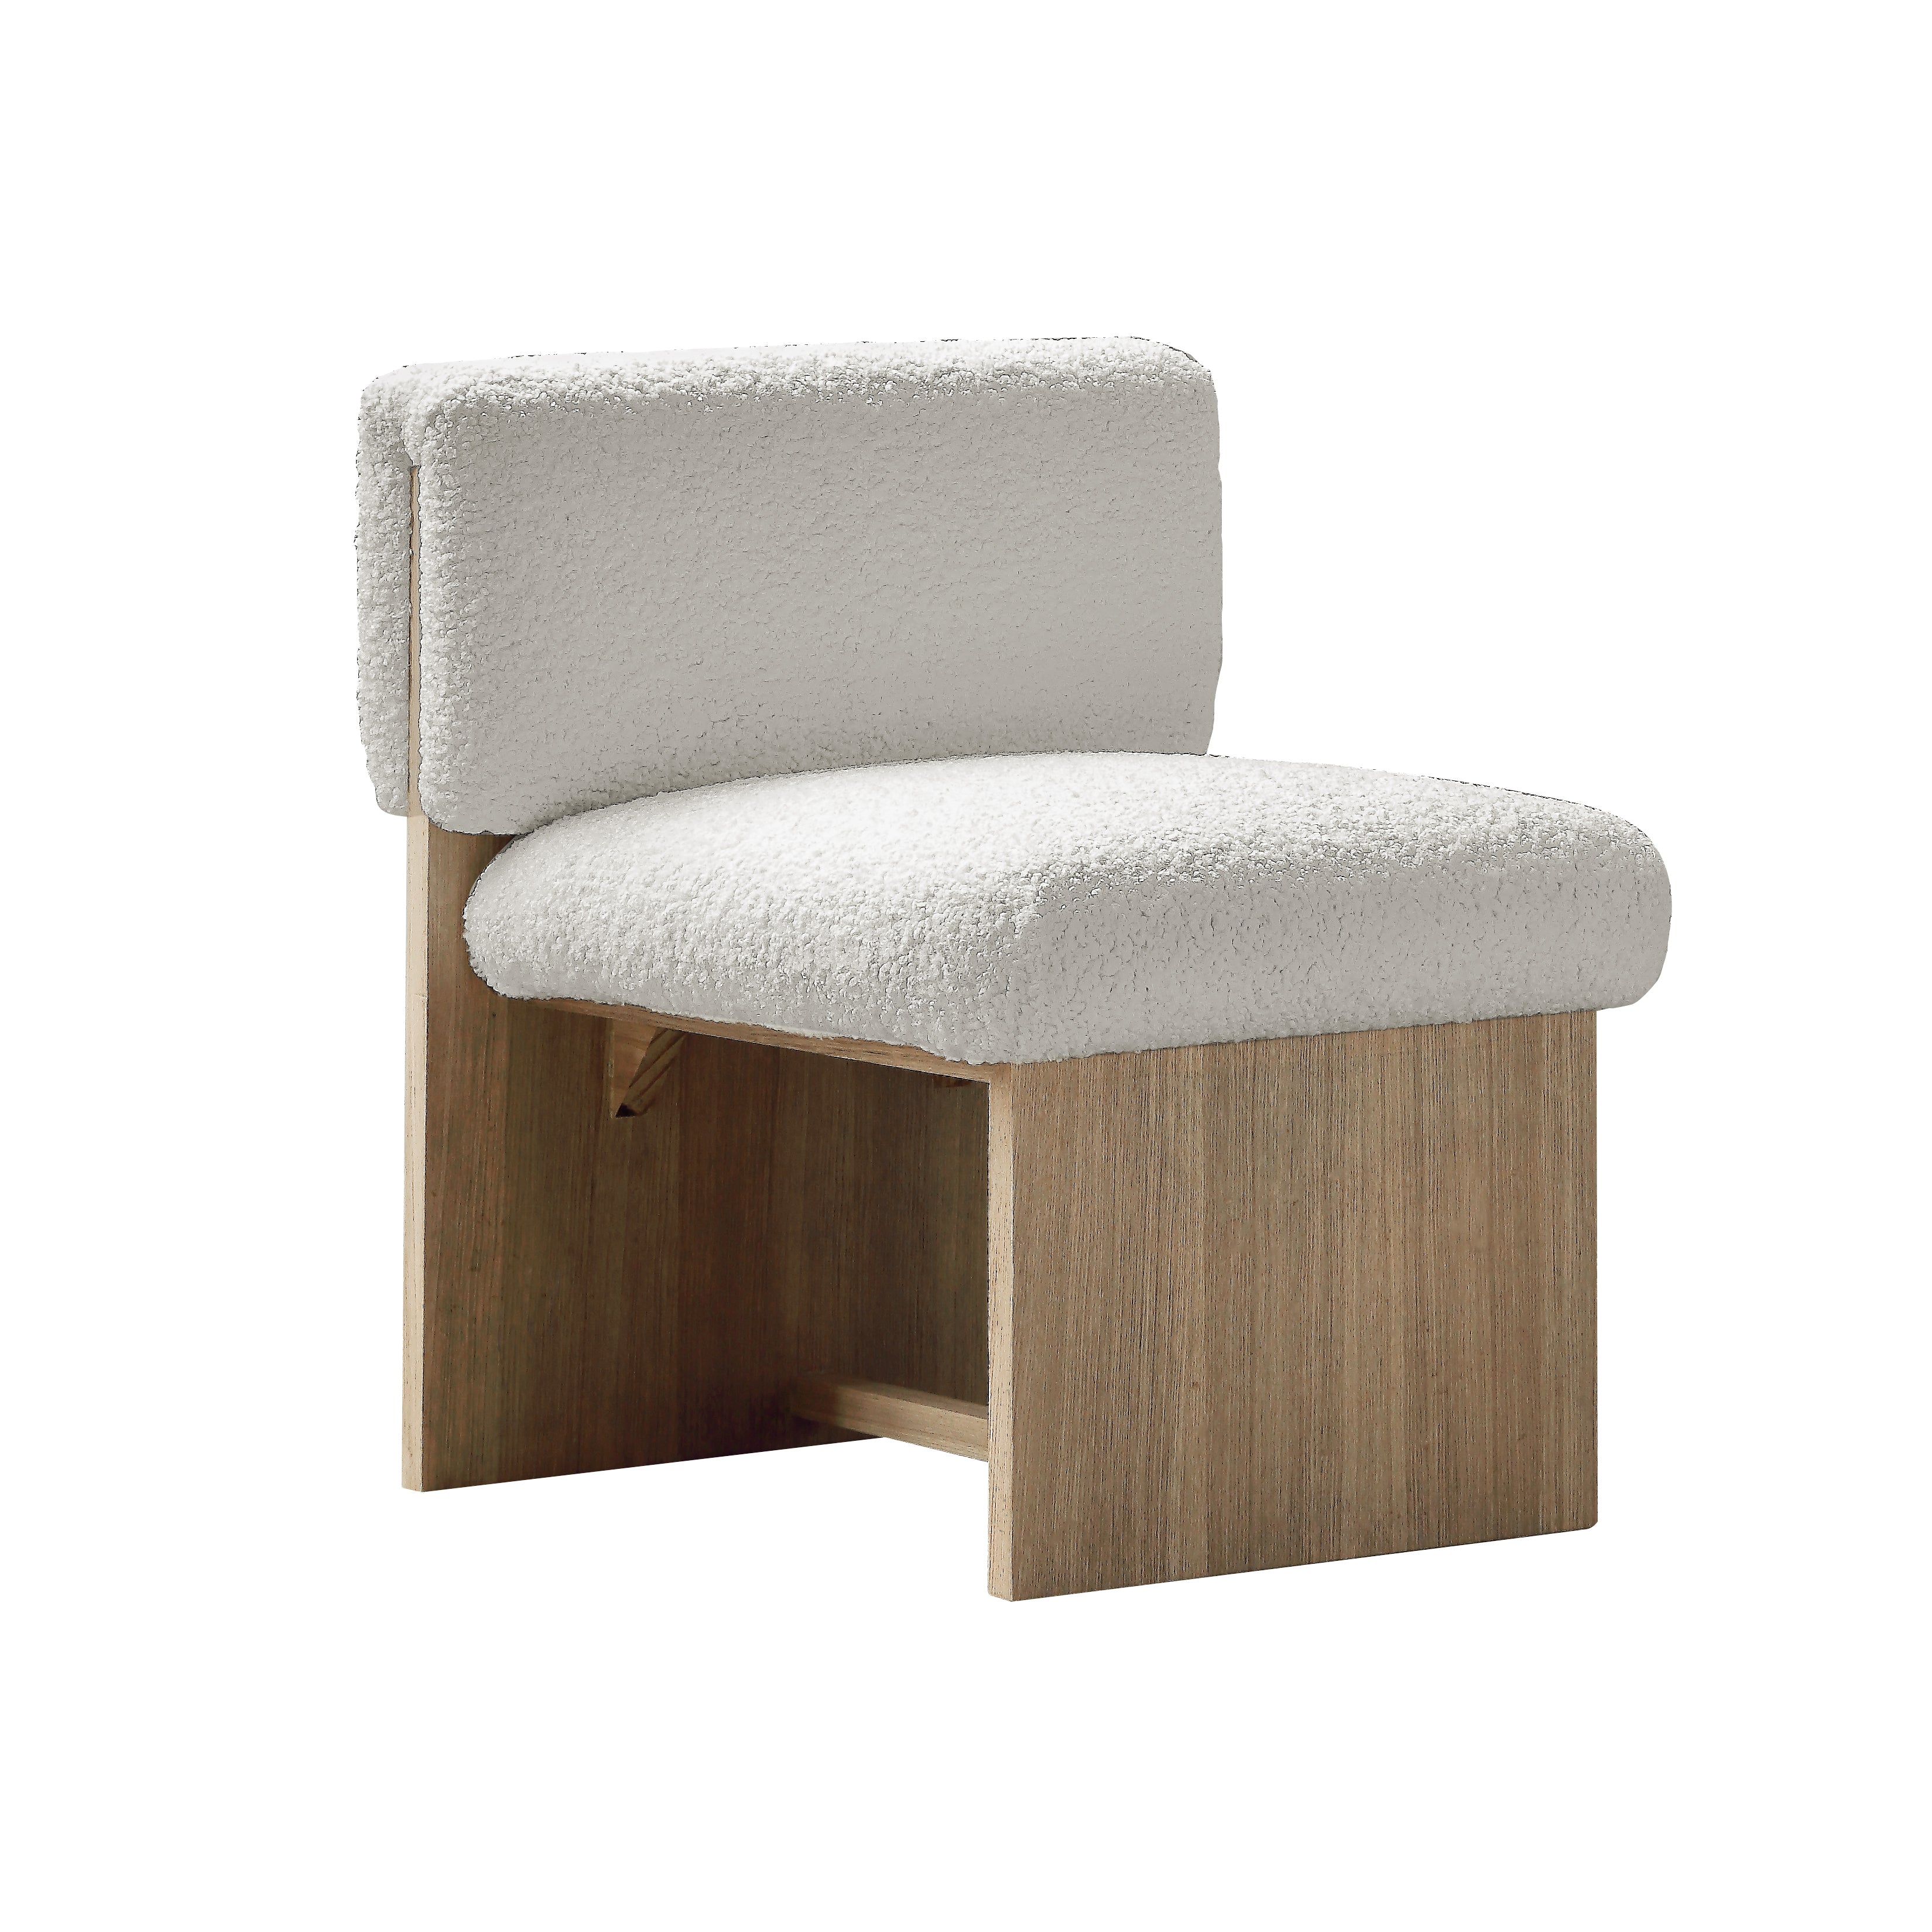 White & Natural Modern Wood Boucle Sherpa Accent Chair Teddy Velvet Upholstery for Living Room